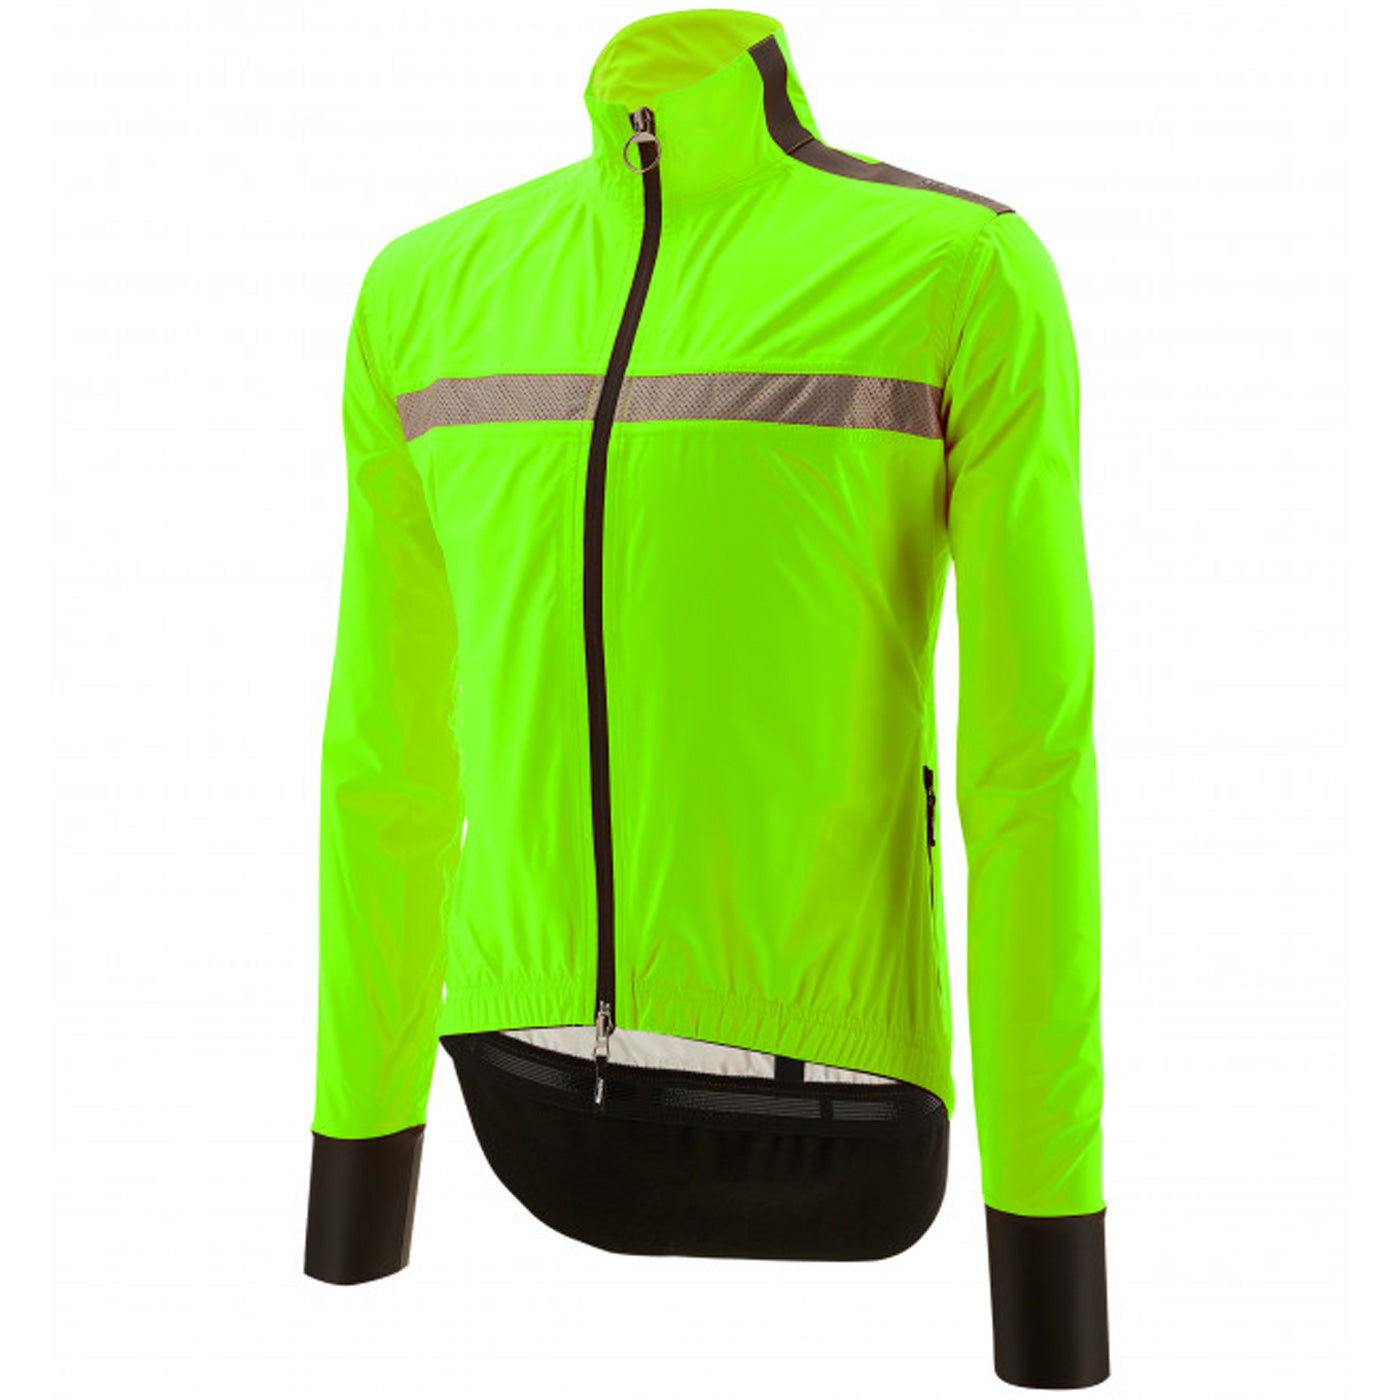 Santini Guard Neo Shell jacket - Green | All4cycling